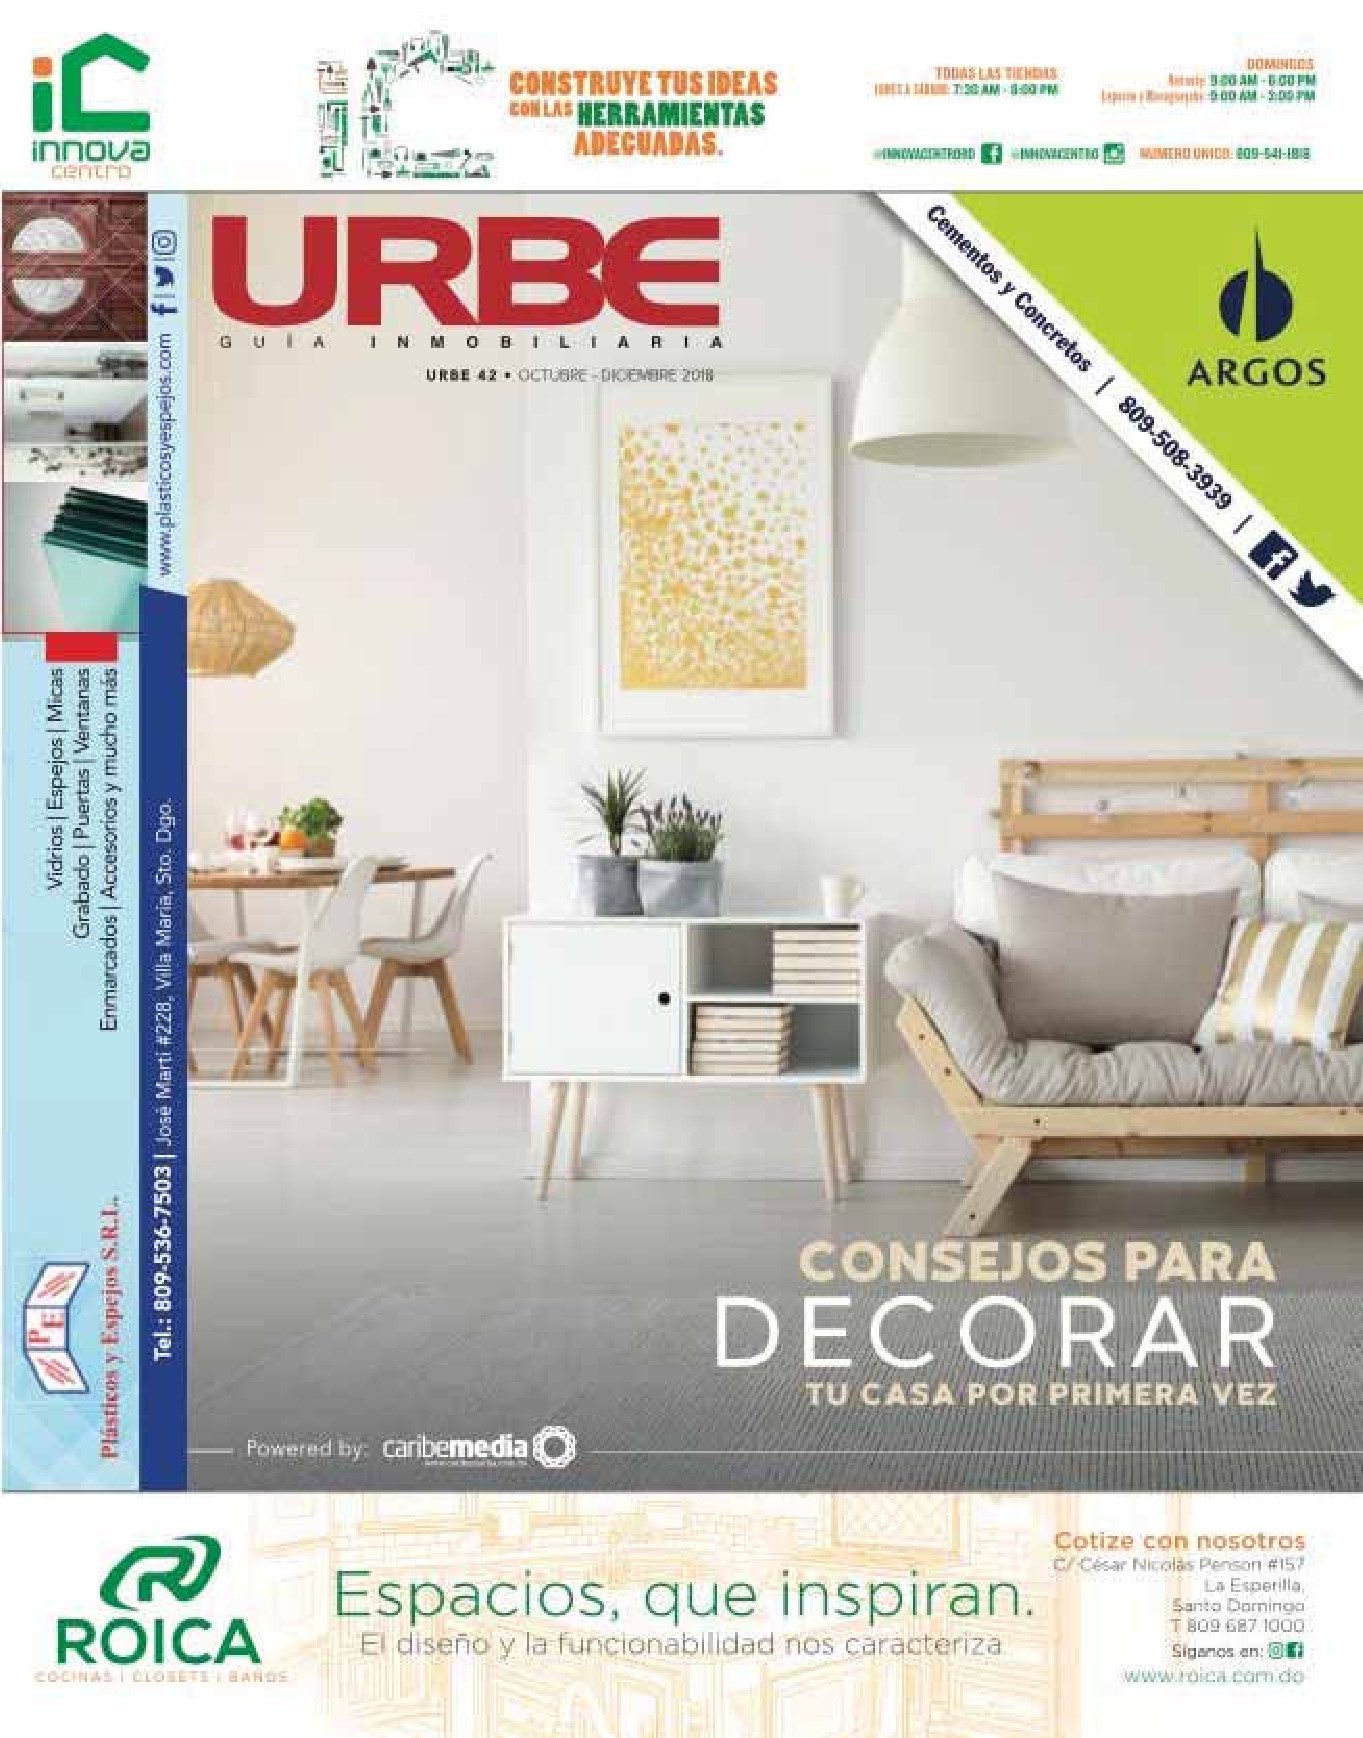 Portada URBE Guía Inmobiliaria: Año 2018 - Mes Septiembre - Edición 42